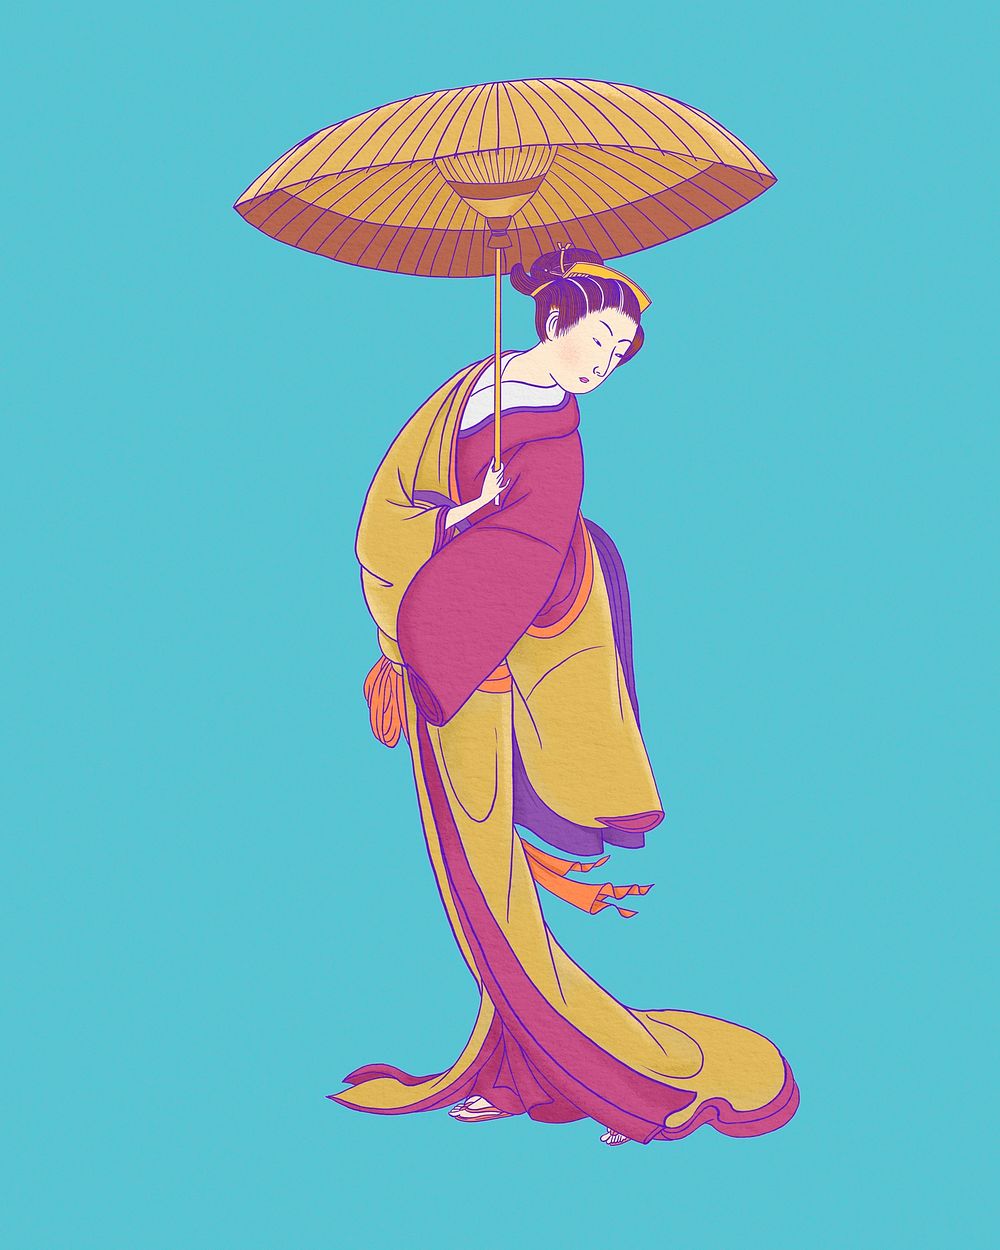 Vintage Japanese woman, holding umbrella character illustration